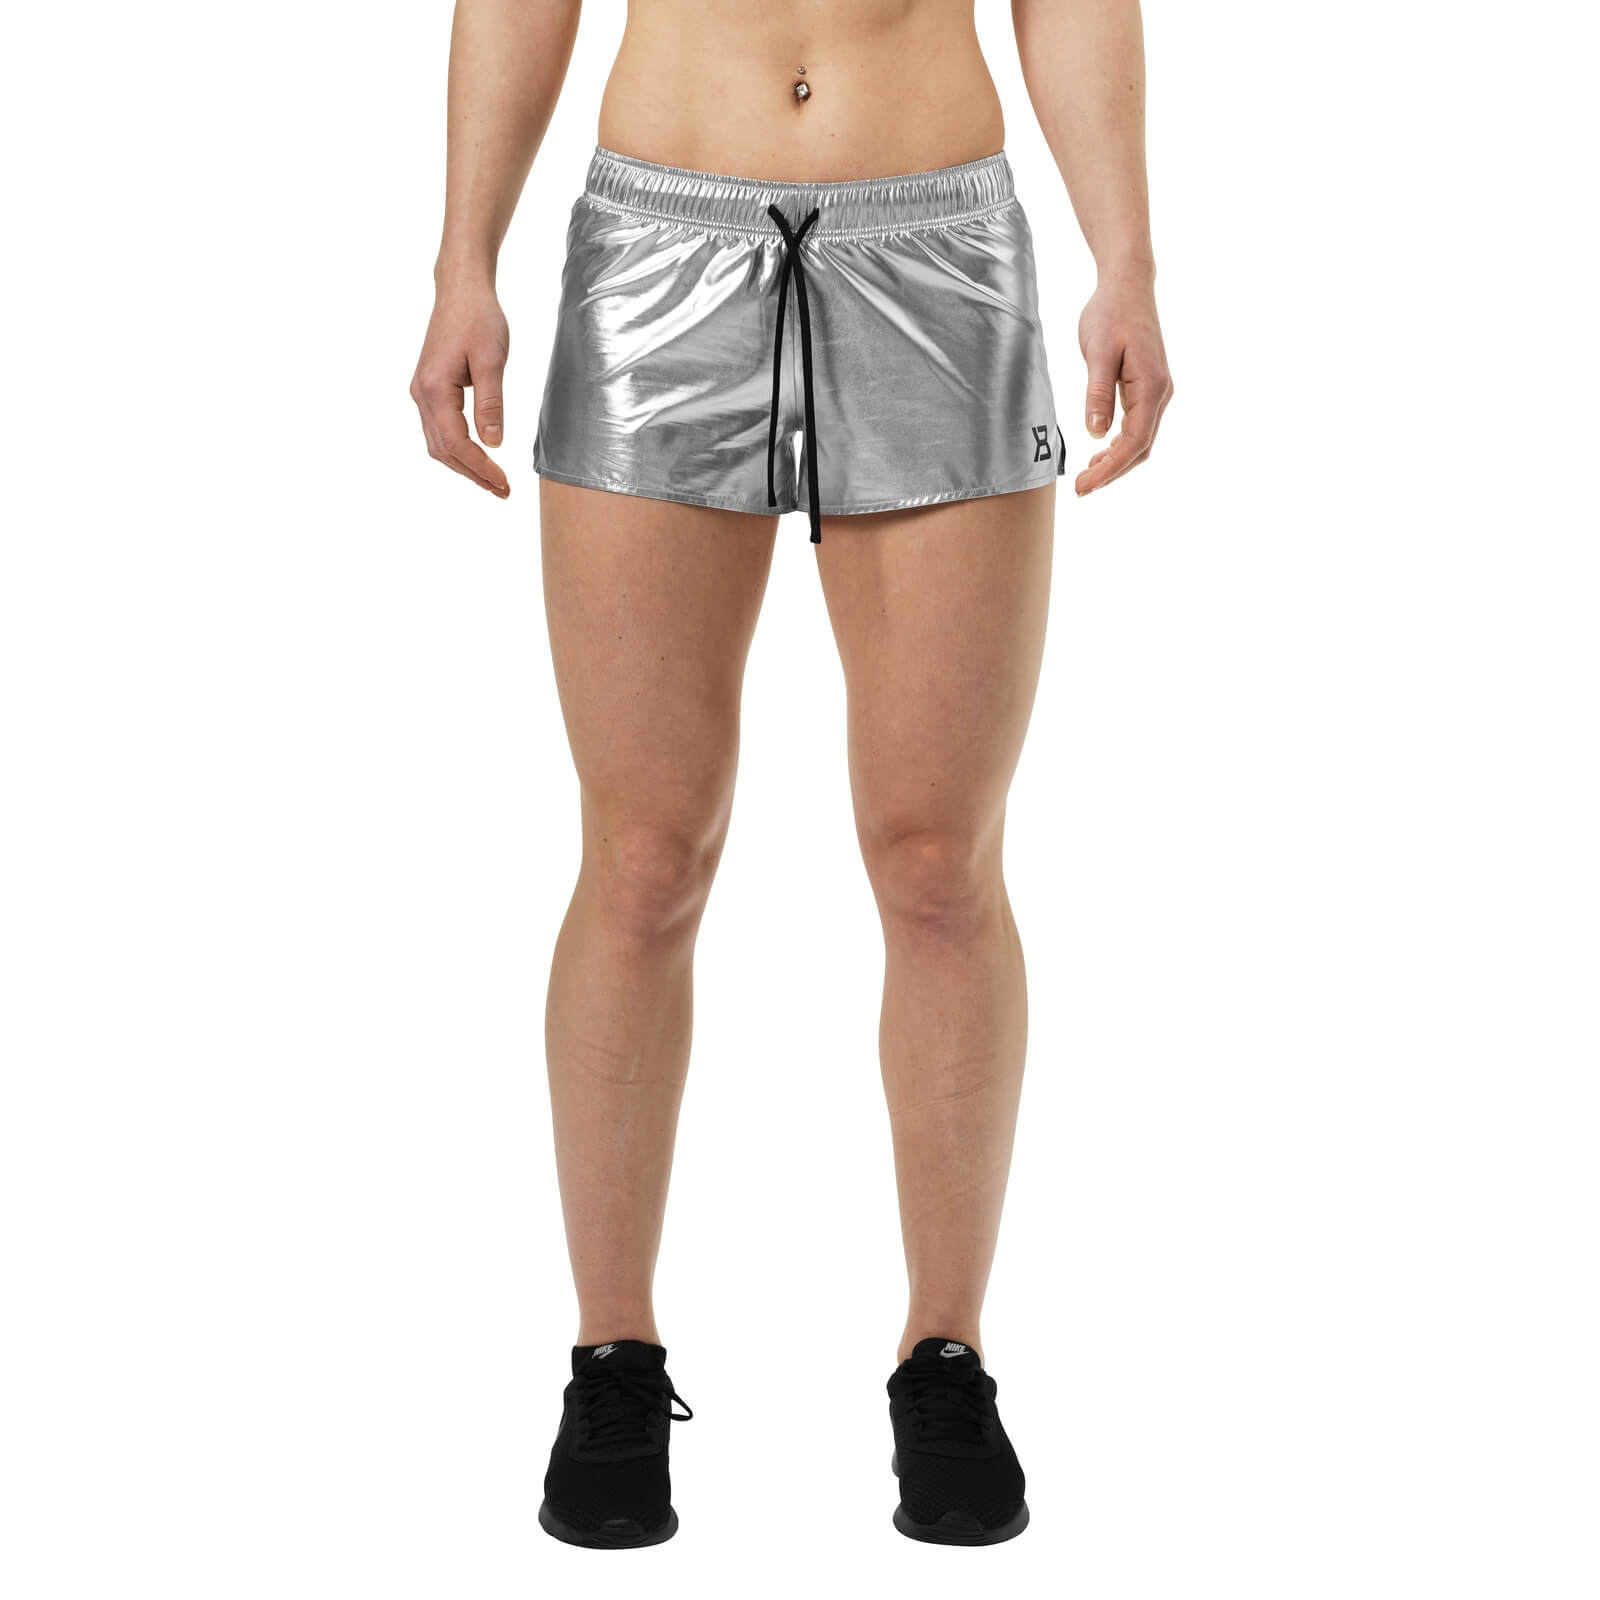 Sjekke Nolita Shorts, metallic, Better Bodies hos SportGymButikken.no